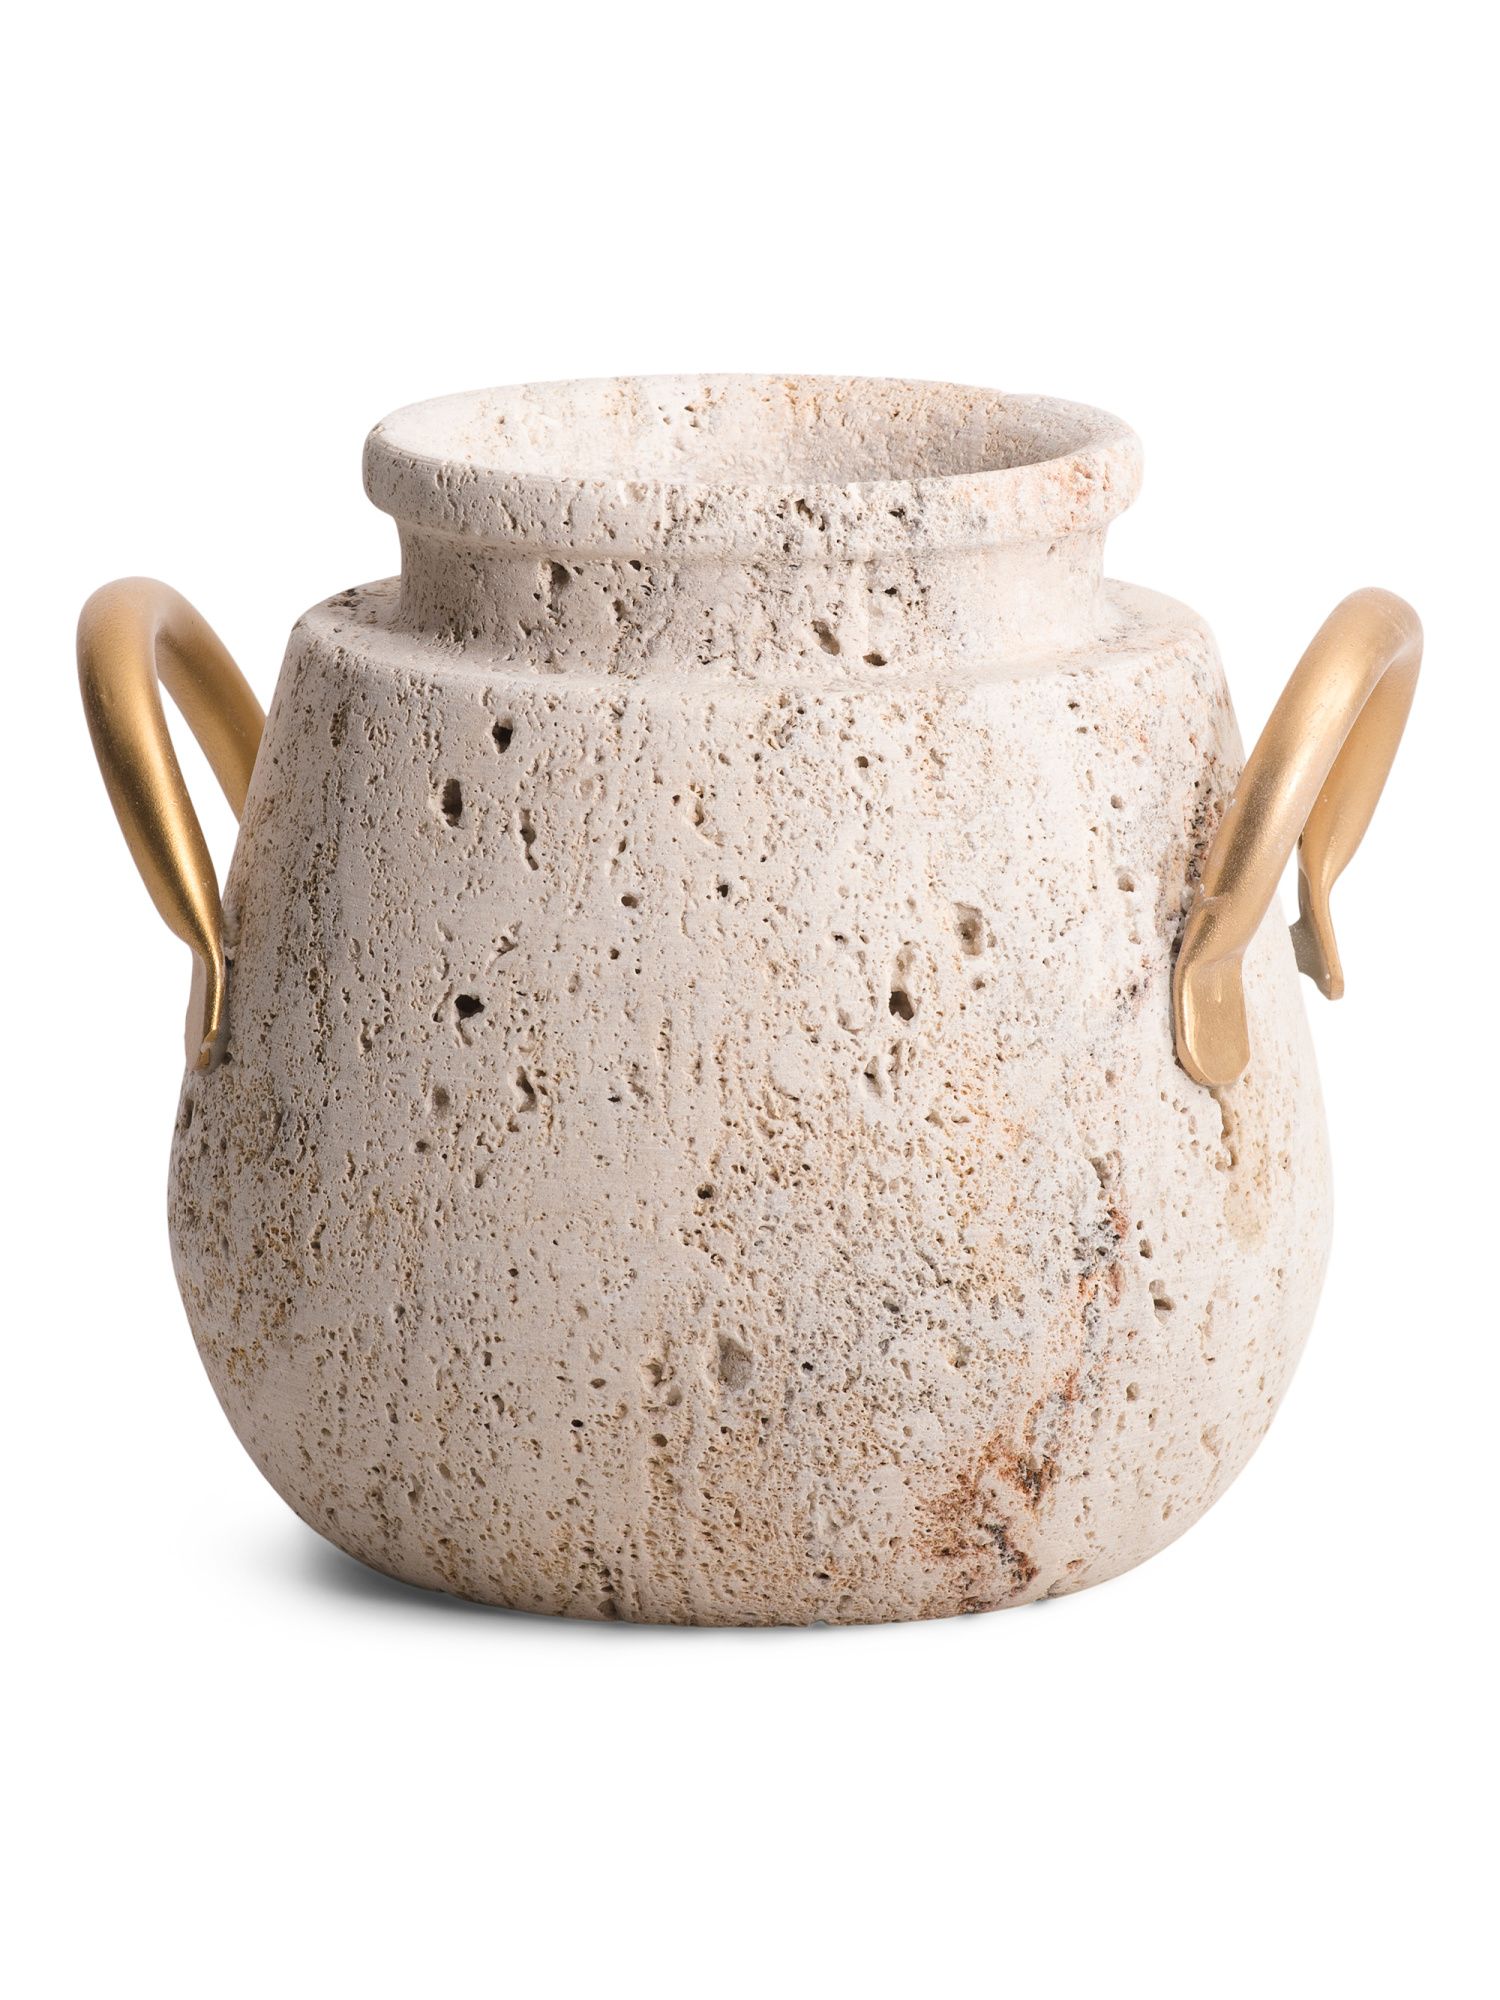 8in Travertine Stone Vase With Handles | TJ Maxx